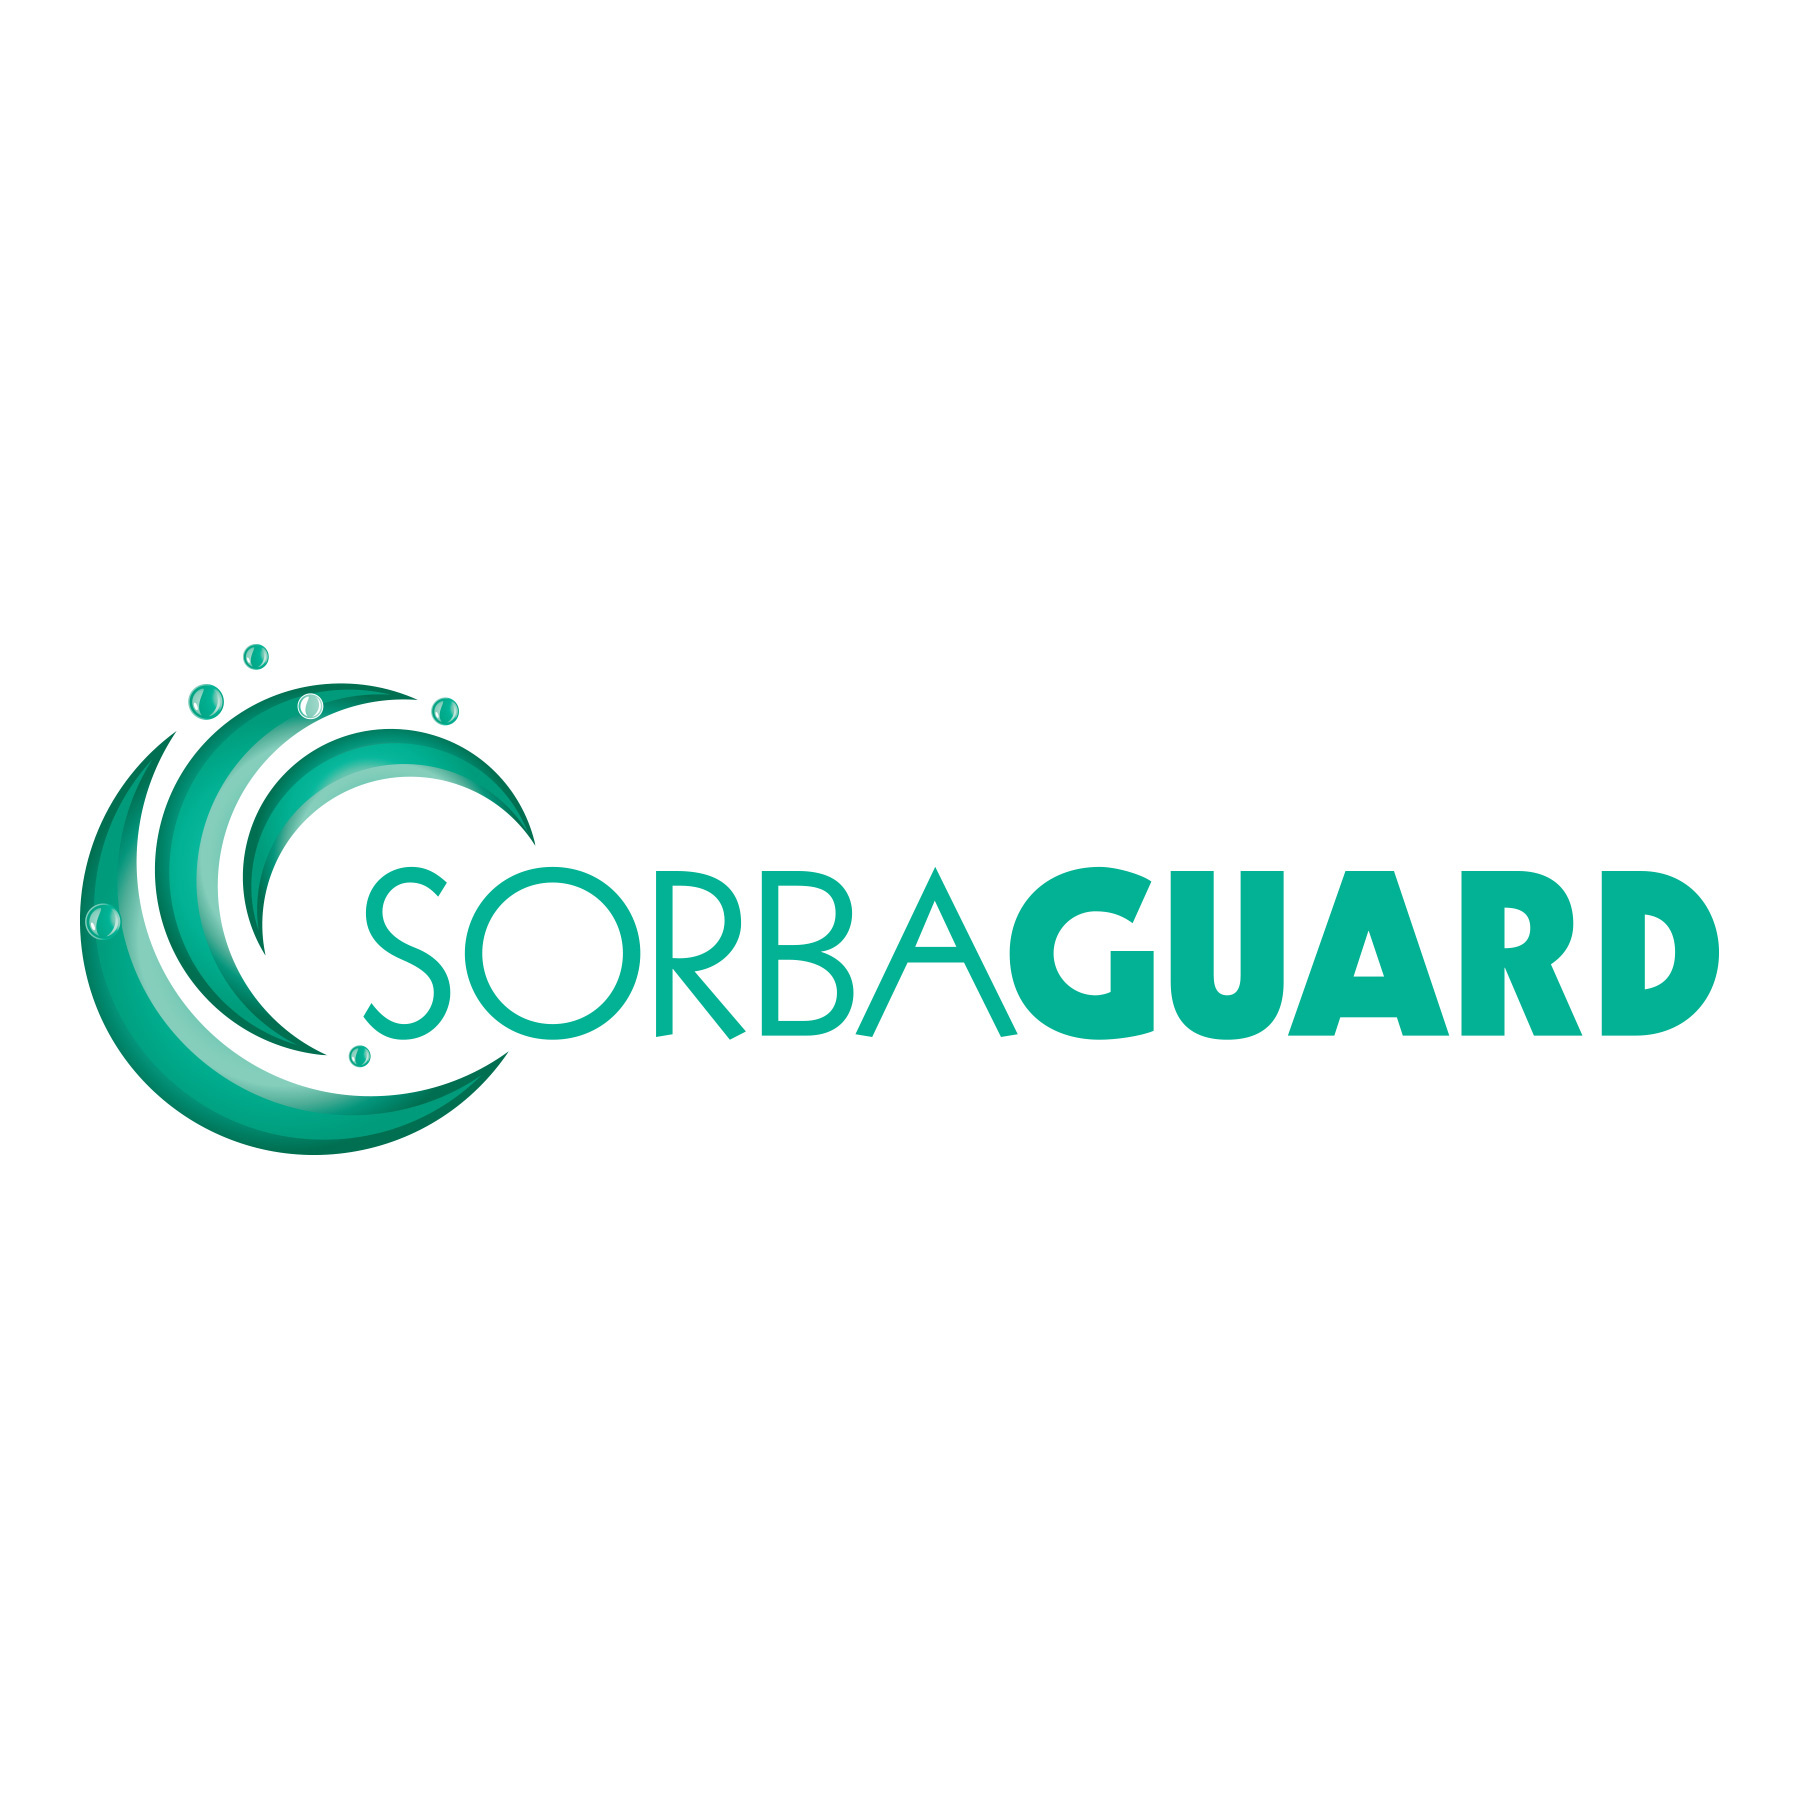 Artext's SorbaGuard Product Logo